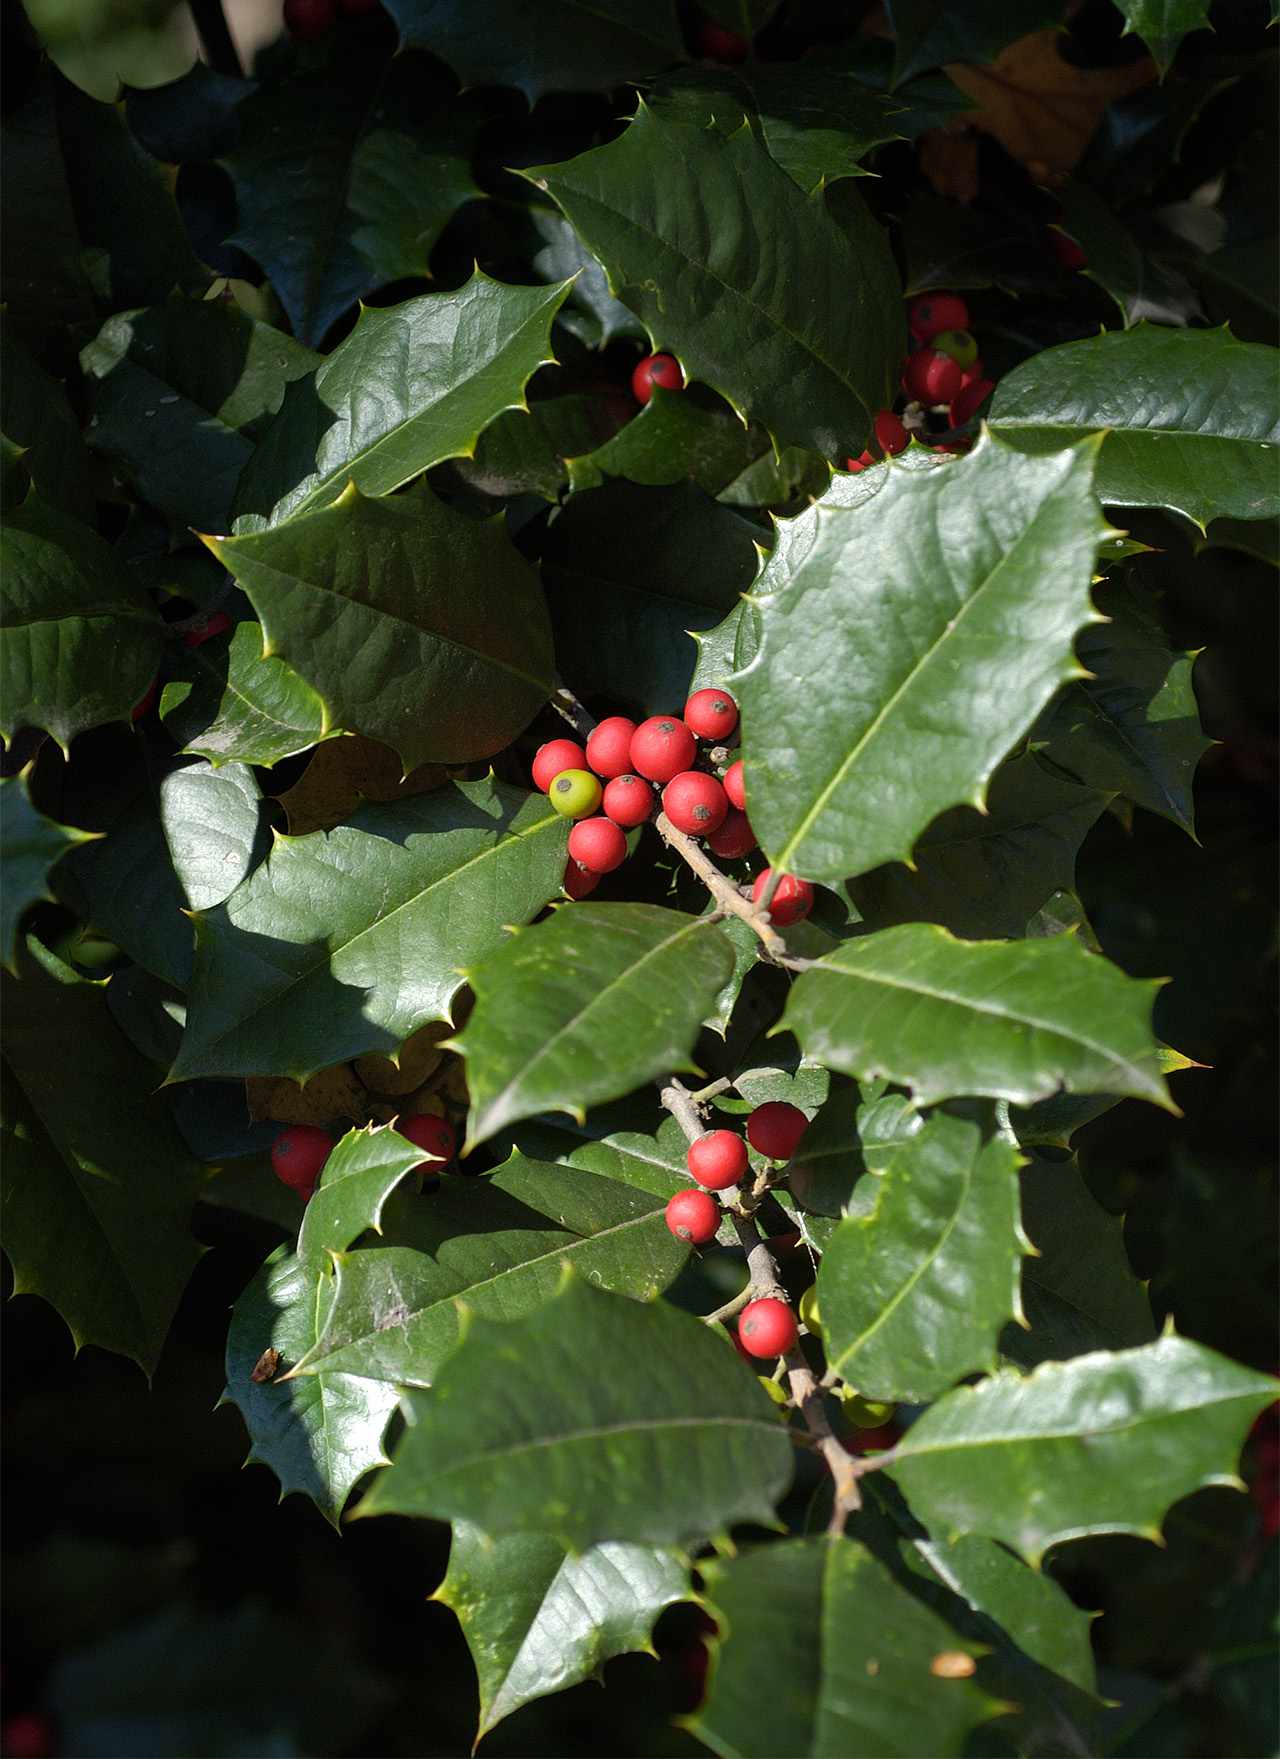 broadleaf evergreens american holly tree red berries and green leaves